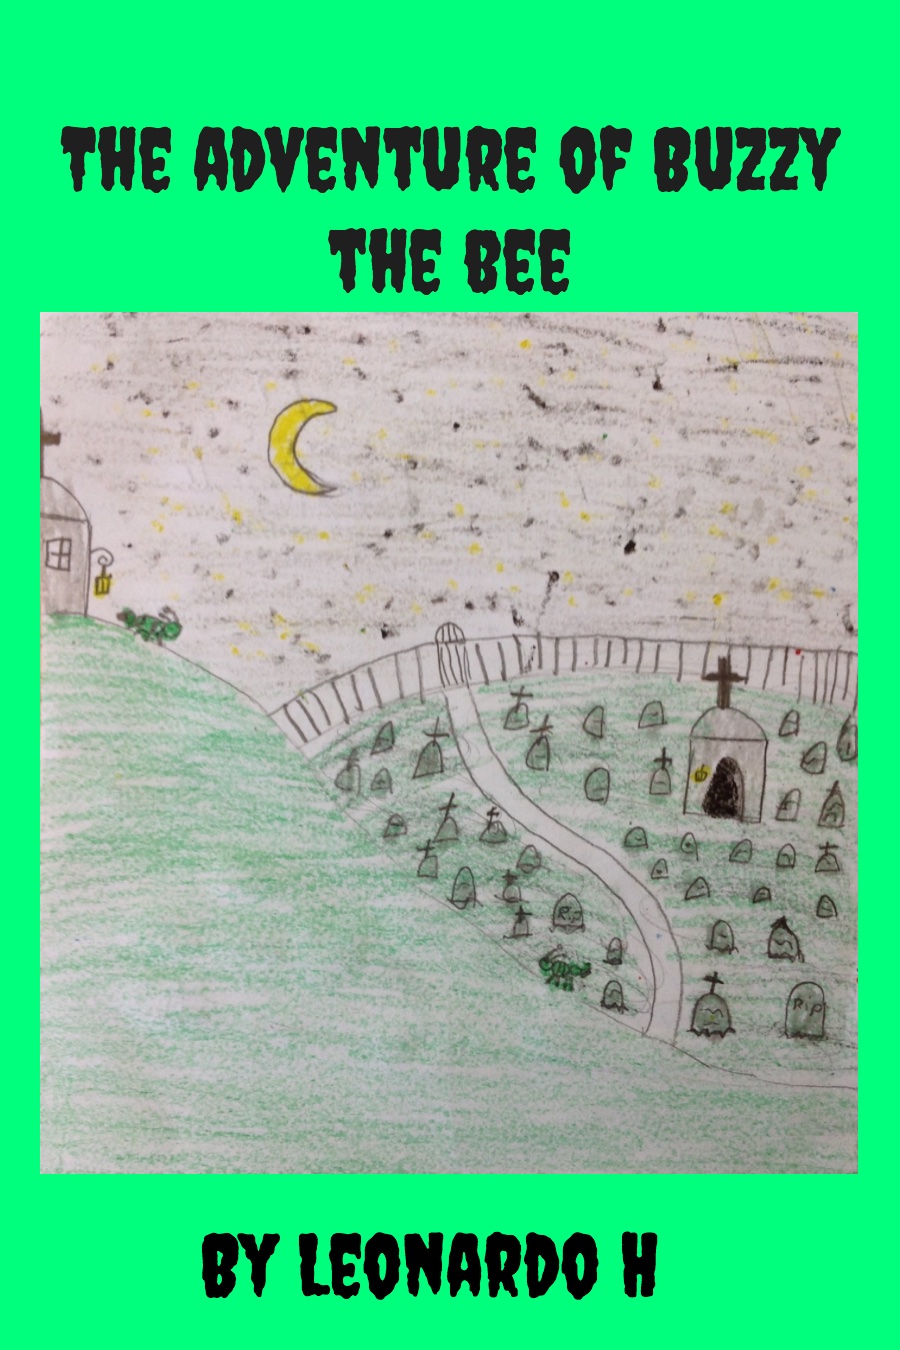 The Adventure of Buzzy the Bee by Leonardo H